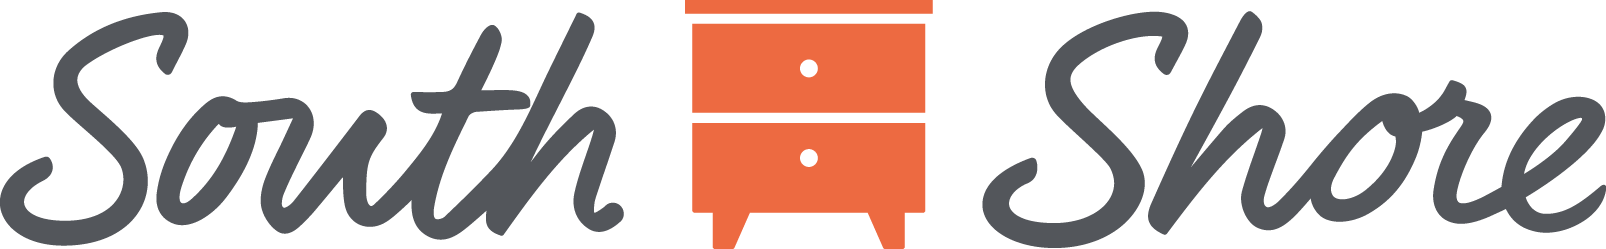 South Shore Furniture Logo